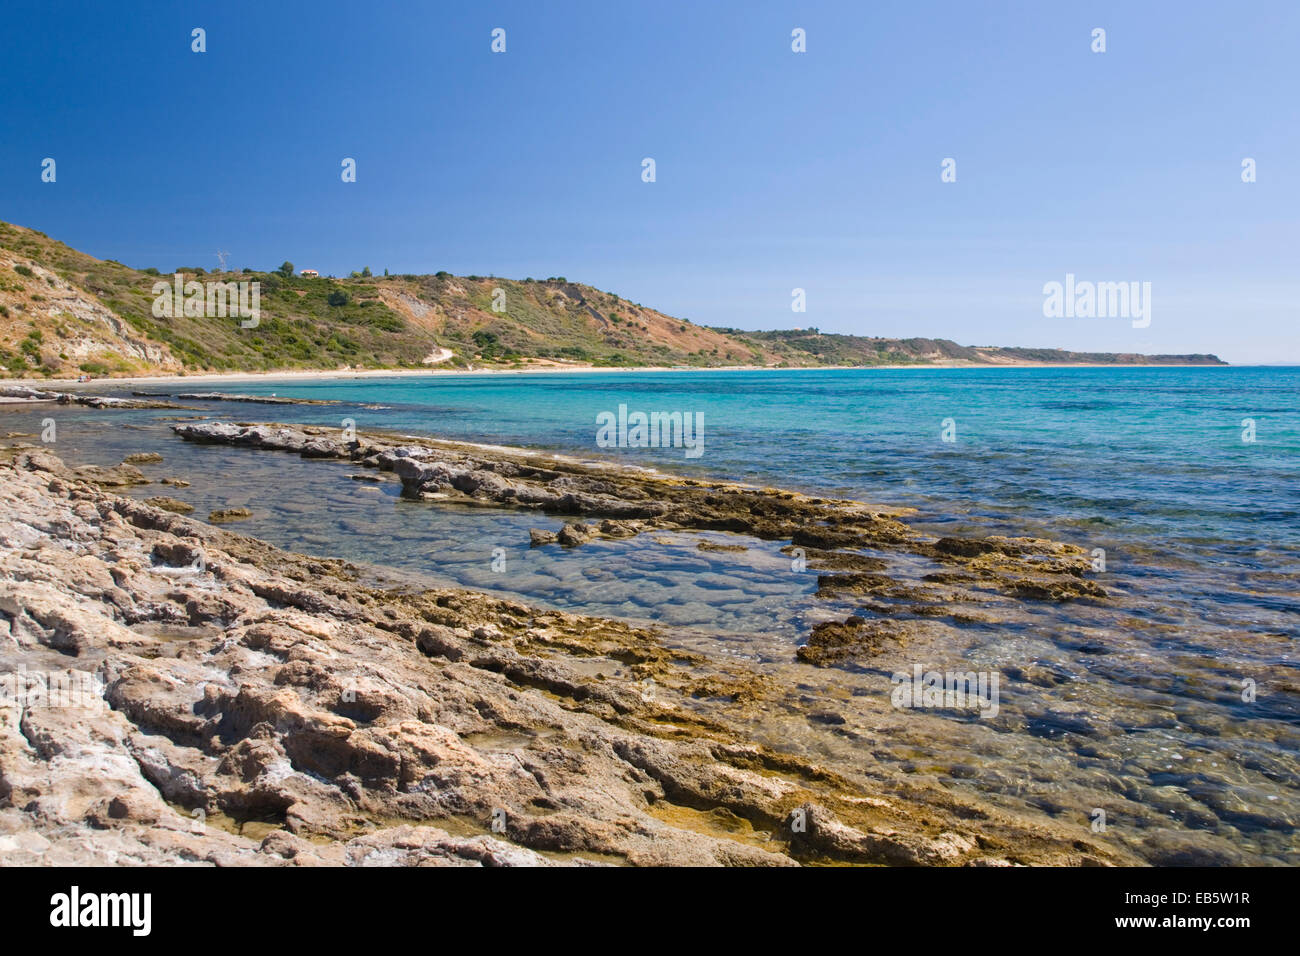 Kato Katelios, Kefalonia, Ionische Inseln, Griechenland. Blick vom felsigen Ufer Katelios Bucht auf unberührten Mounda Strand. Stockfoto